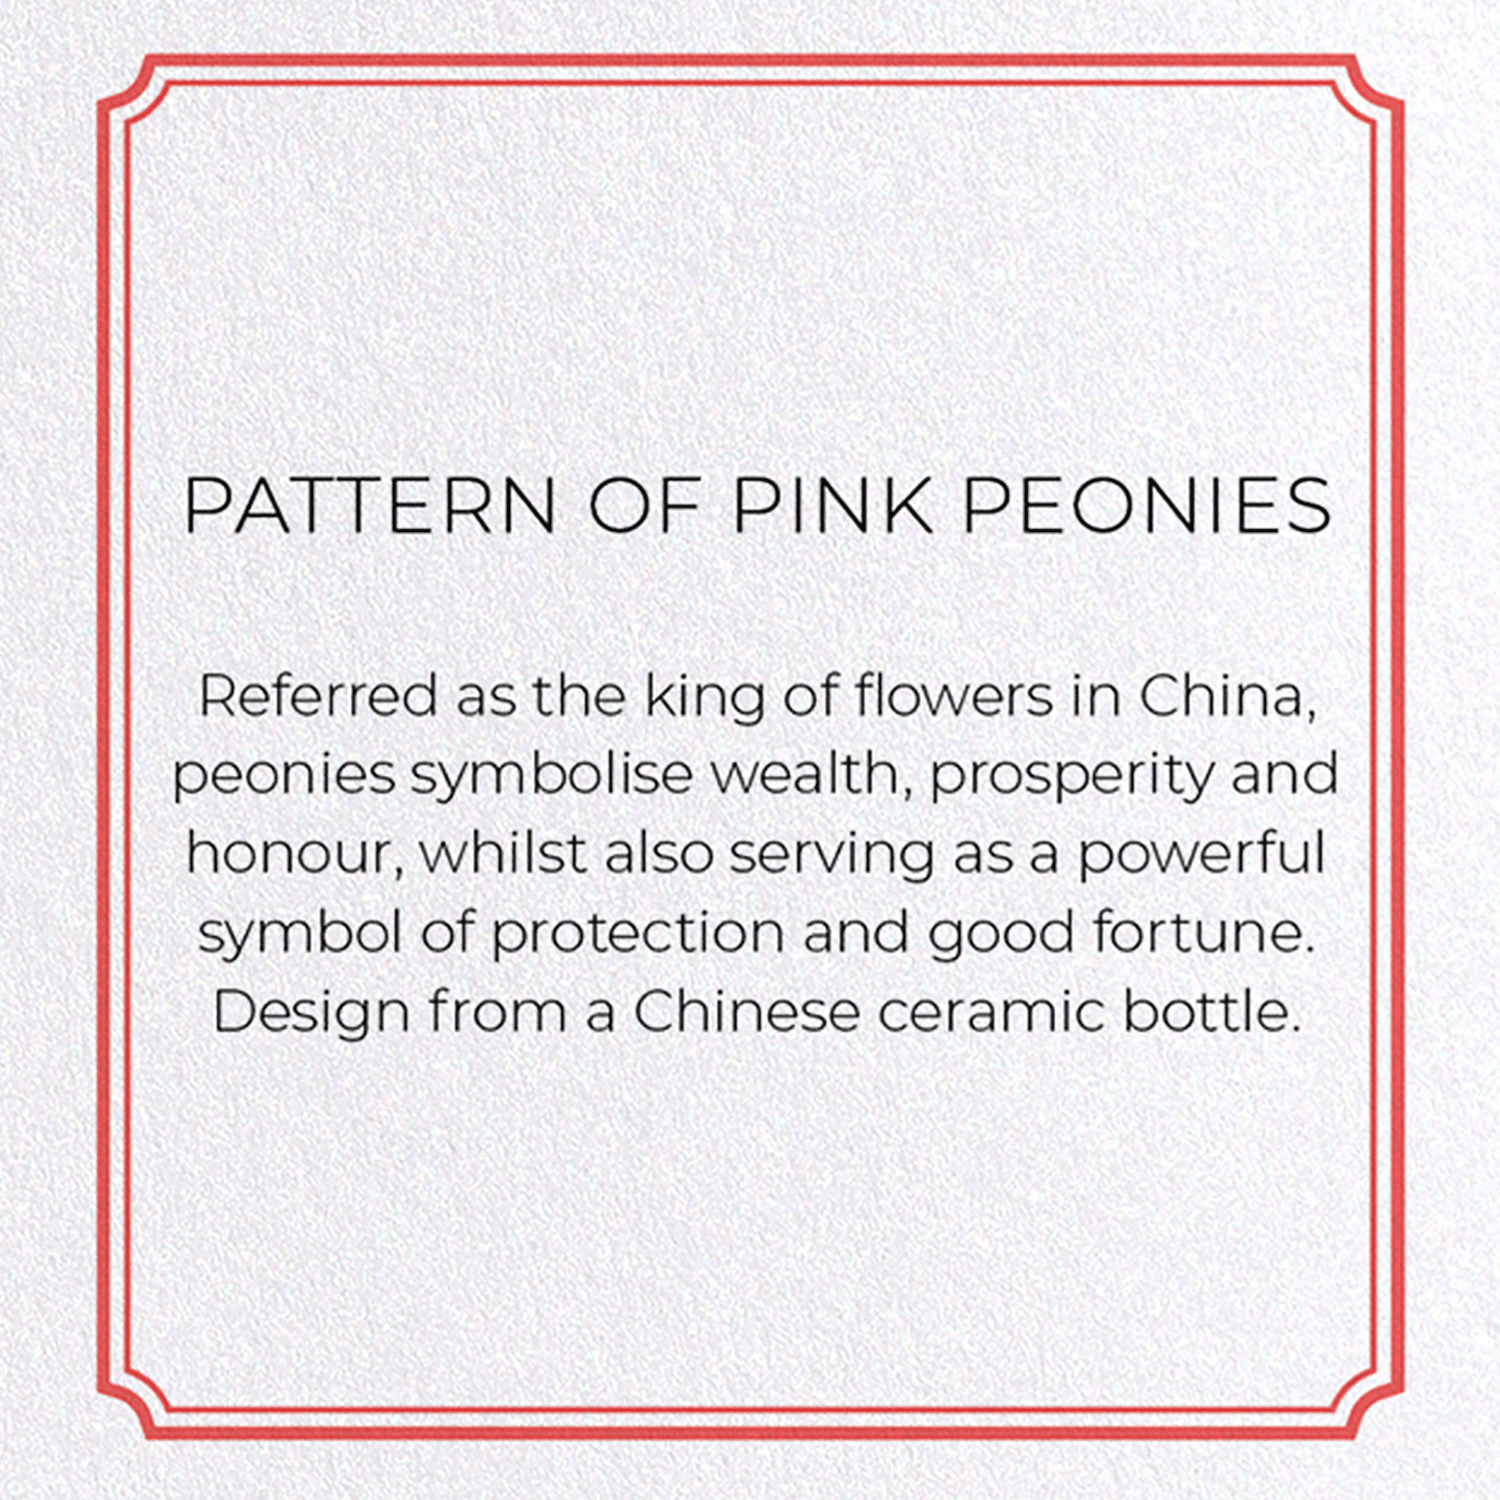 PATTERN OF PINK PEONIES